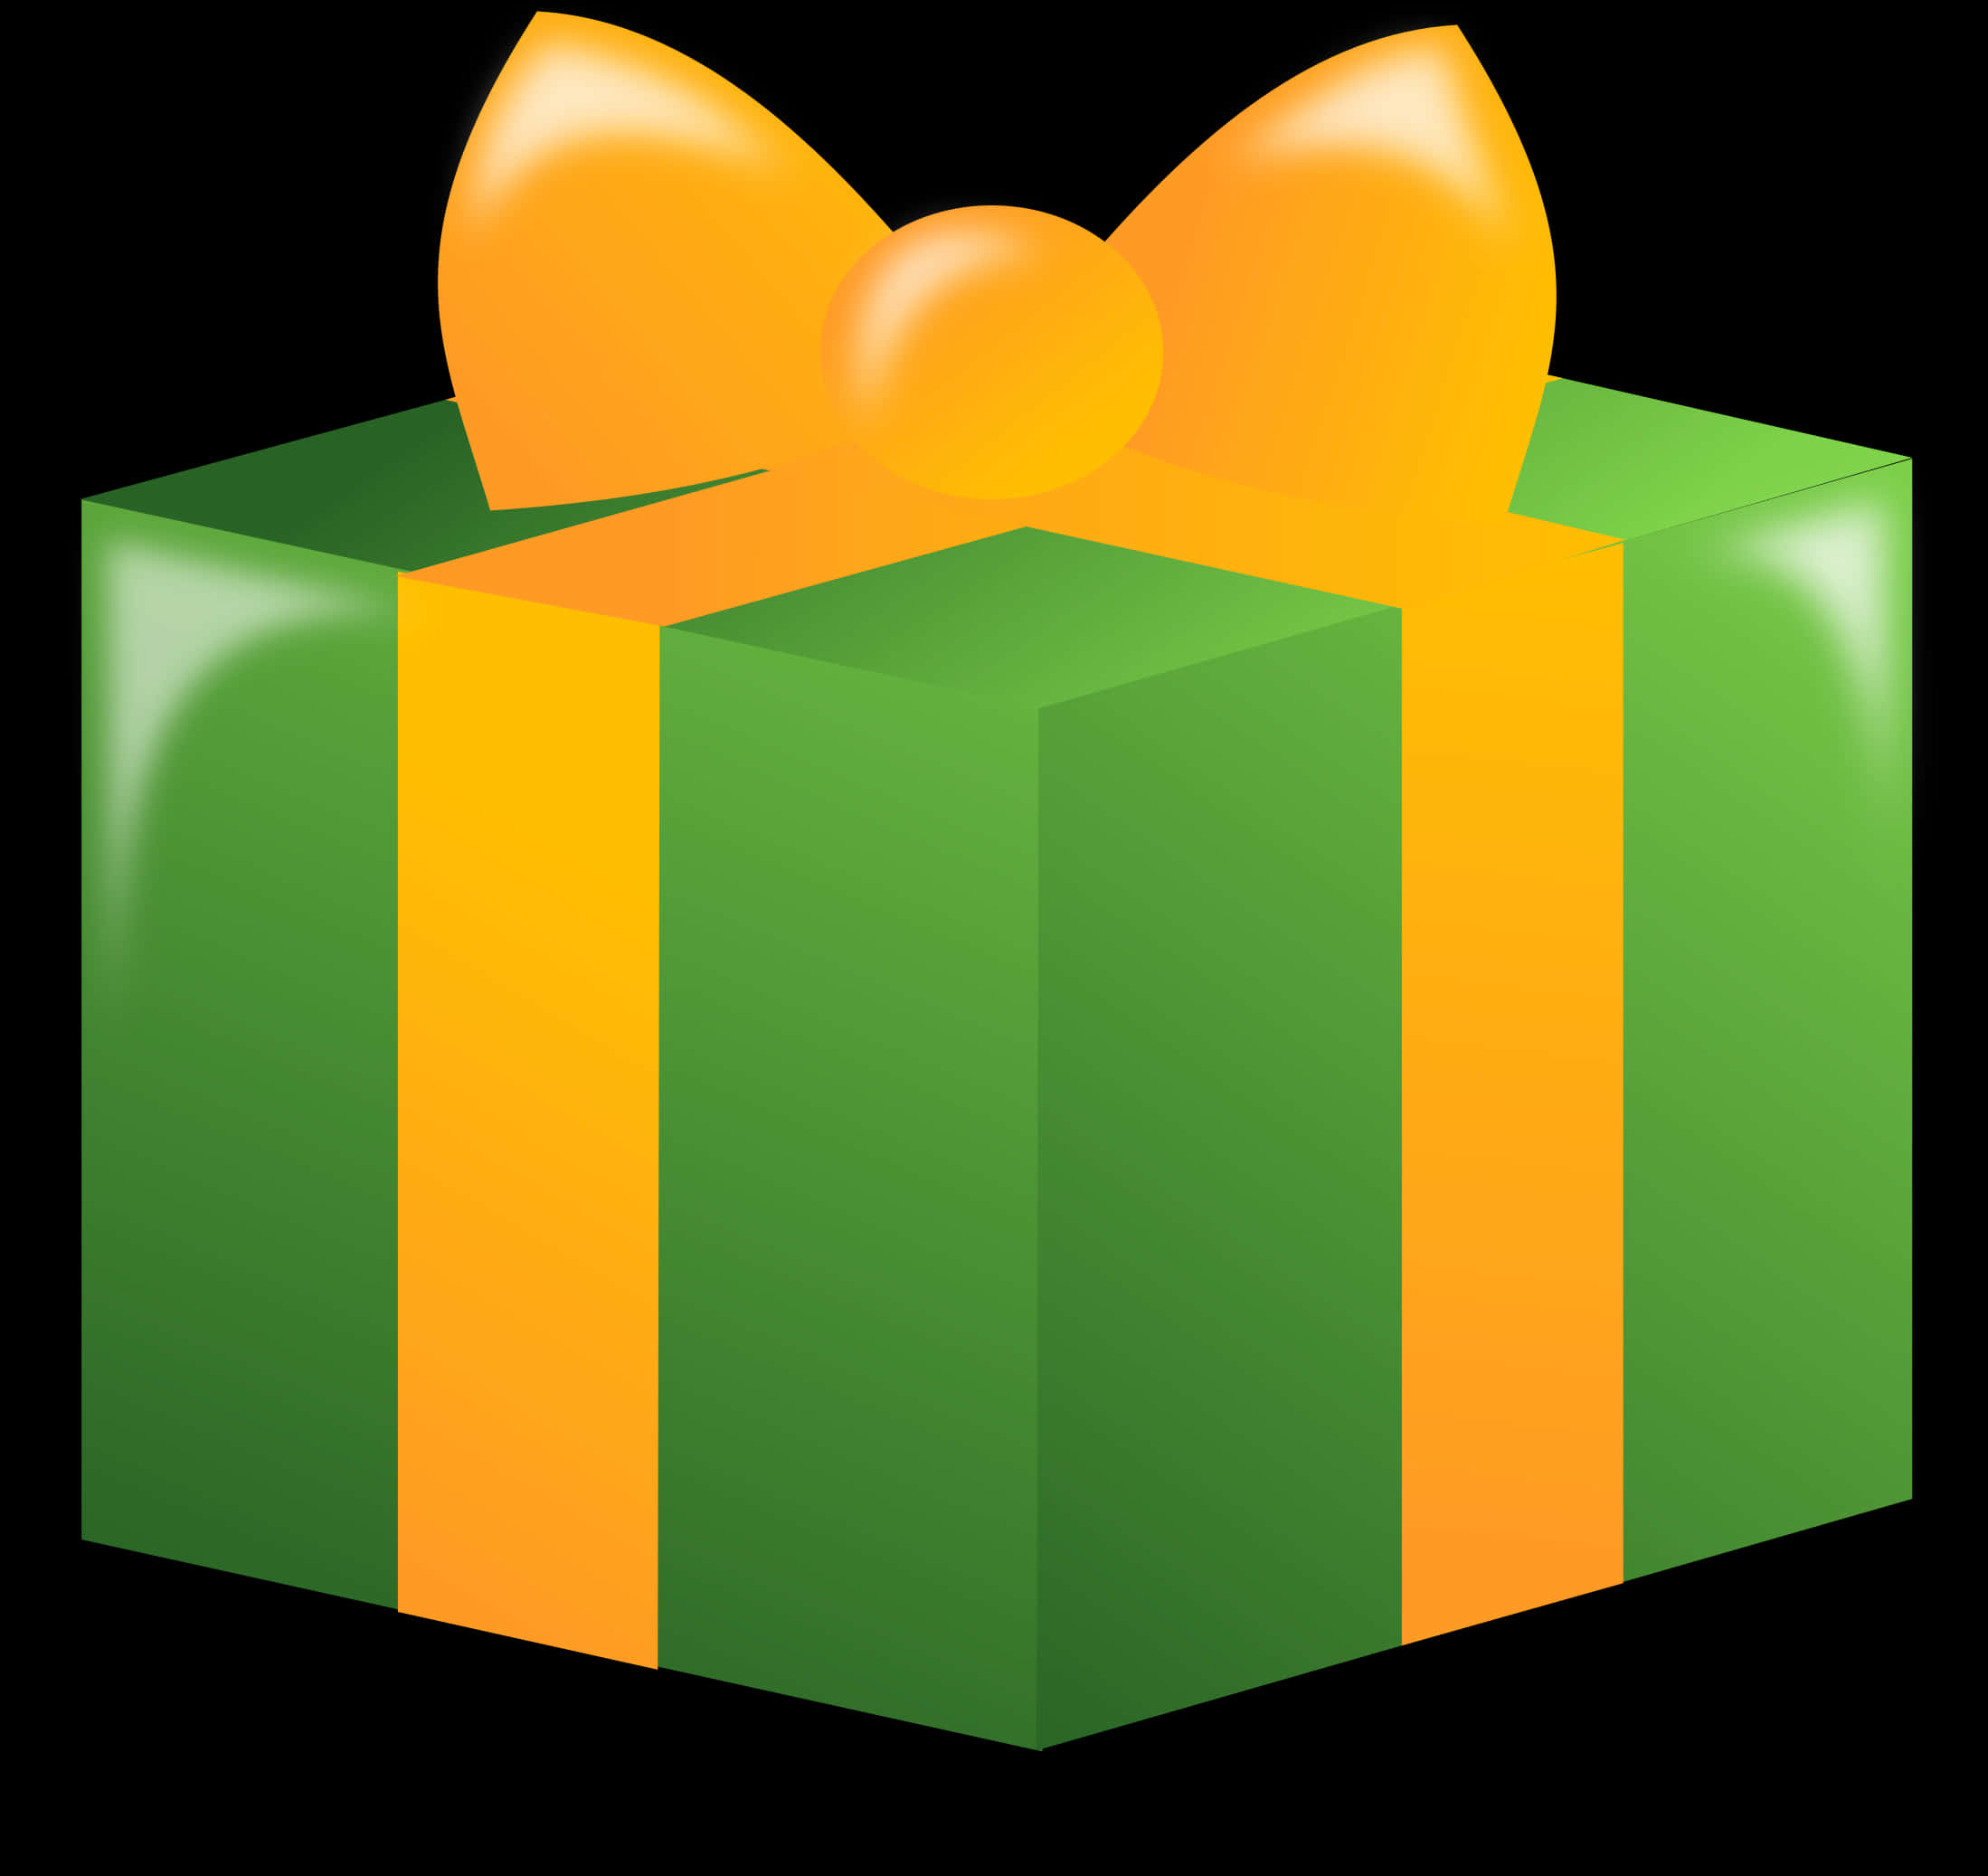 A Green And Orange Gift Box